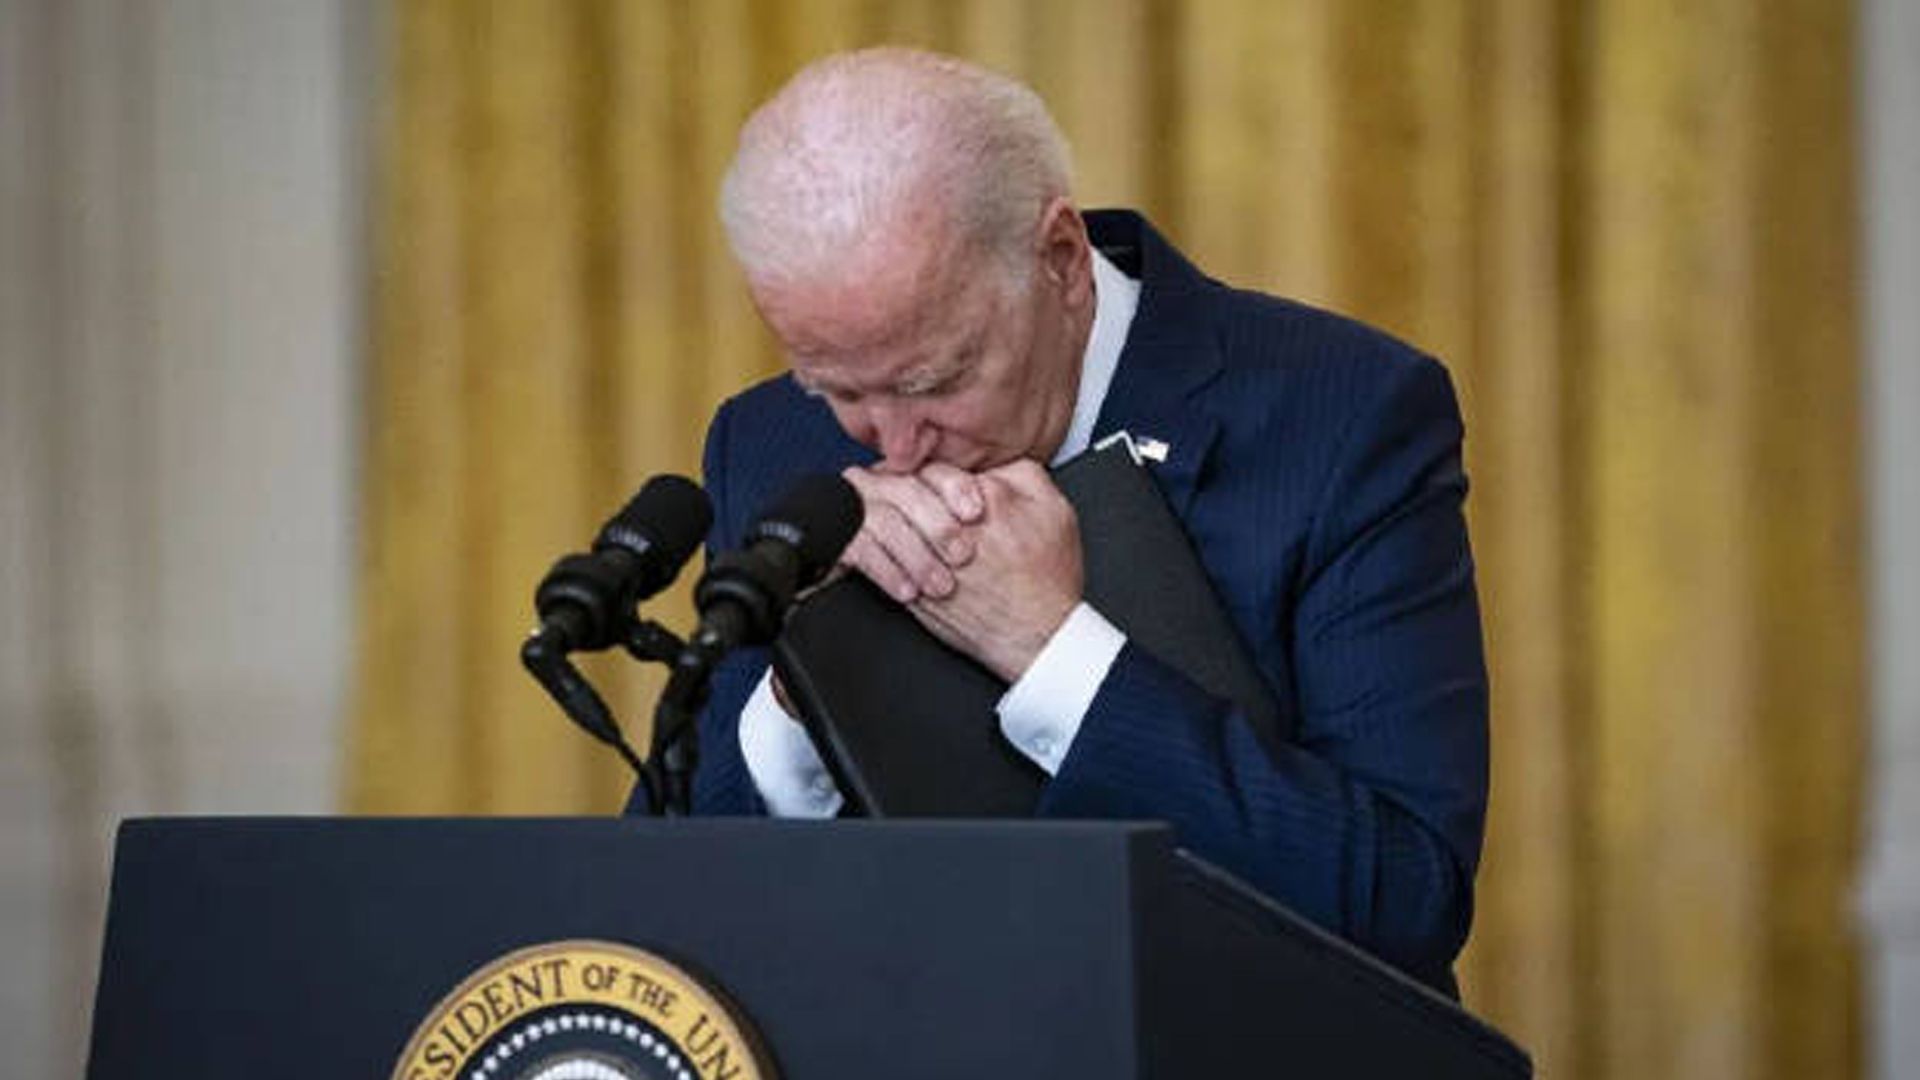 If you missed Biden’s speech last night, here’s a recap